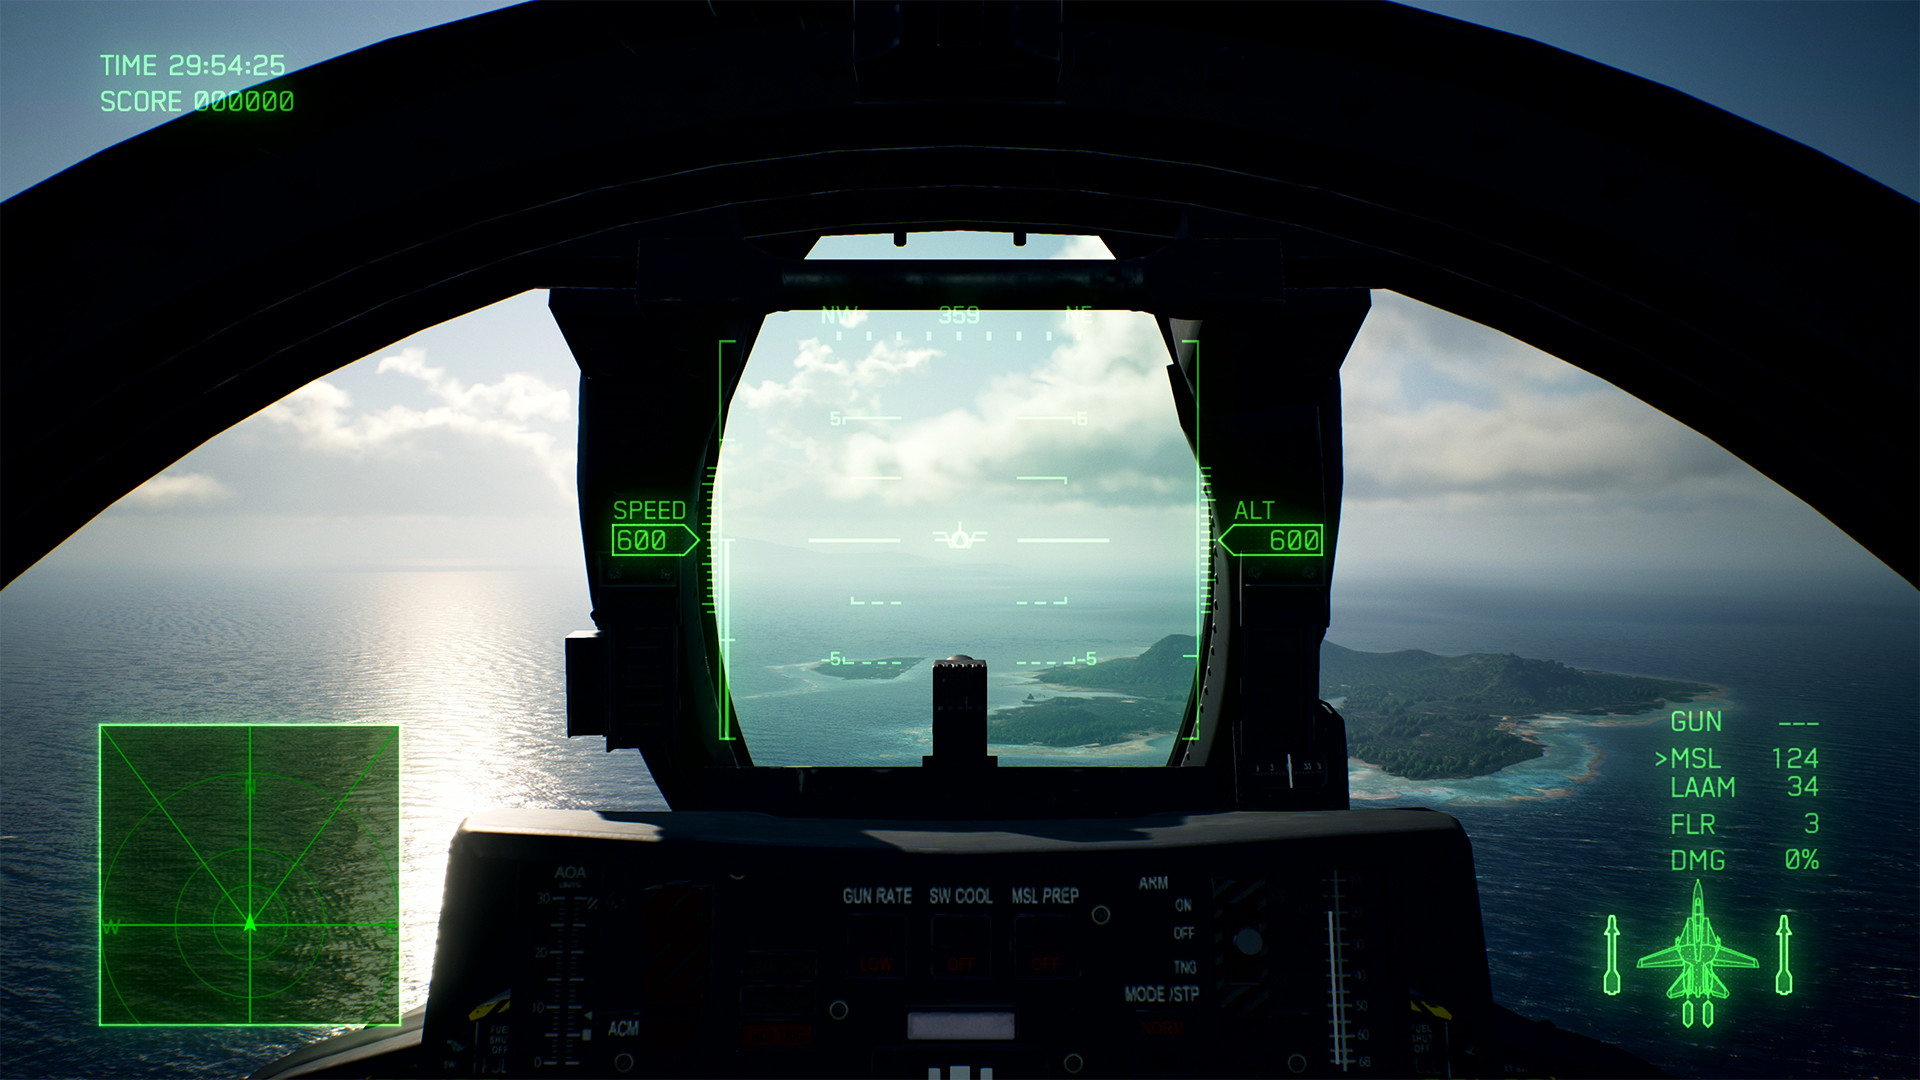 ACE COMBAT™ 7: SKIES UNKNOWN - TOP GUN: Maverick Aircraft Set - on Steam